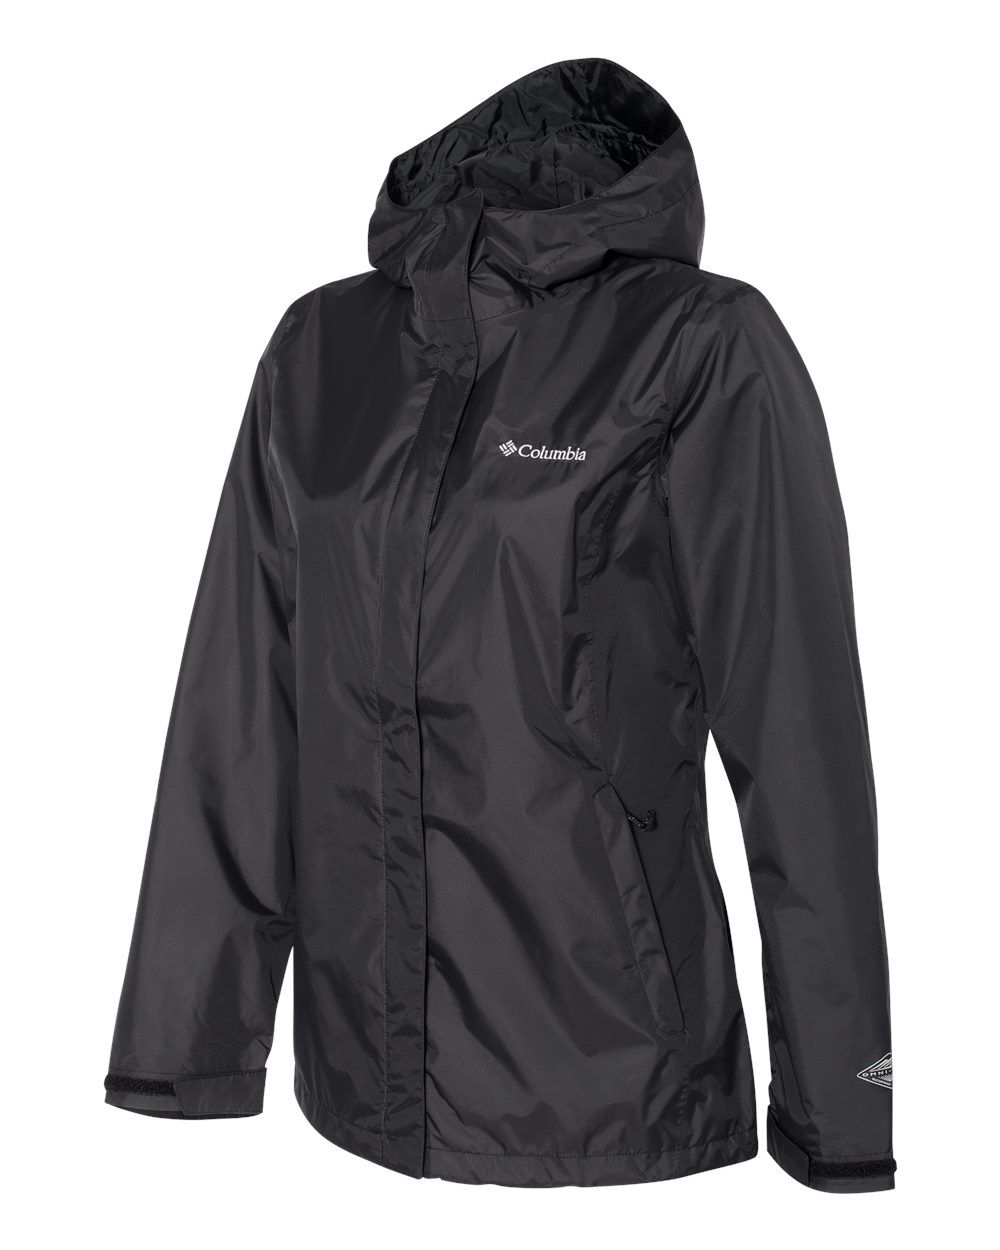 Columbia 153411 - Women's Arcadia II Rain Jacket $52.85 - Outerwear